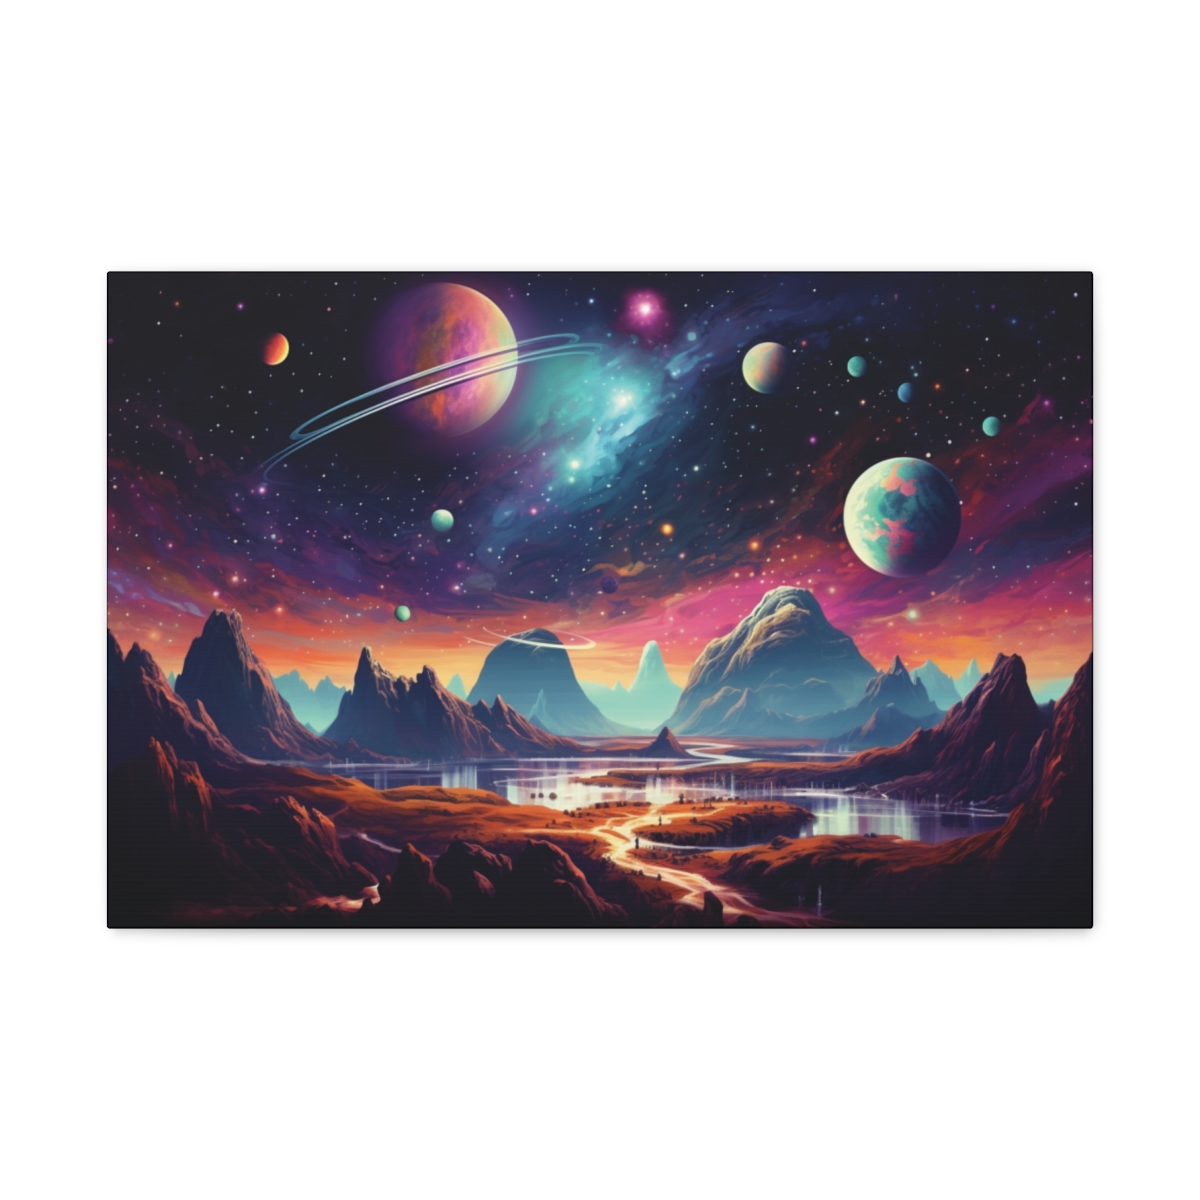 Sci-fi Art Canvas Print: Worlds Beyond Us